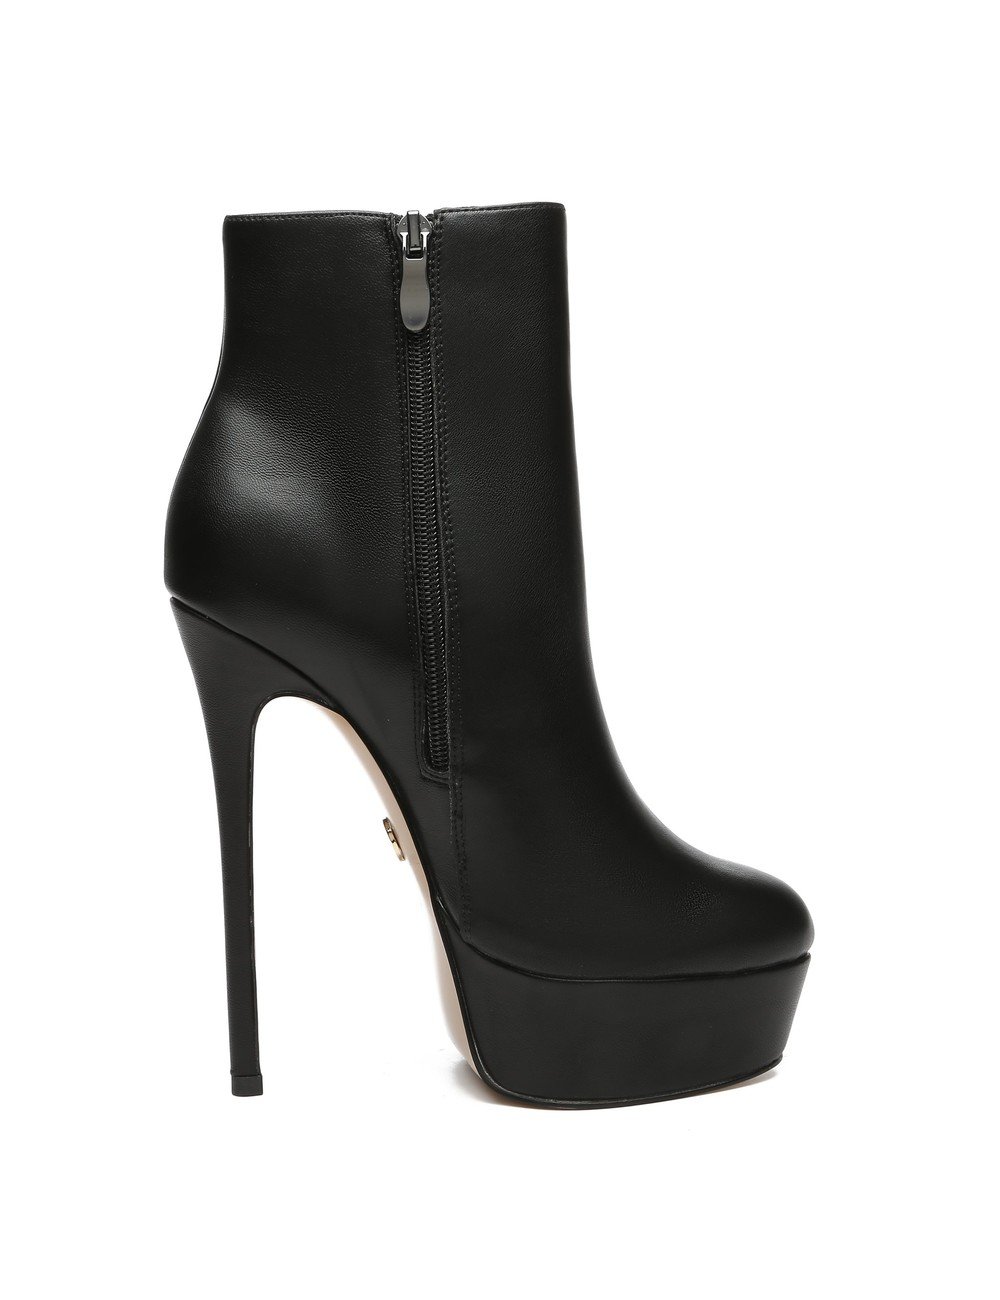 Giaro SIDDY BLACK MATTE ANKLE BOOTS - Shoebidoo Shoes | Giaro high heels